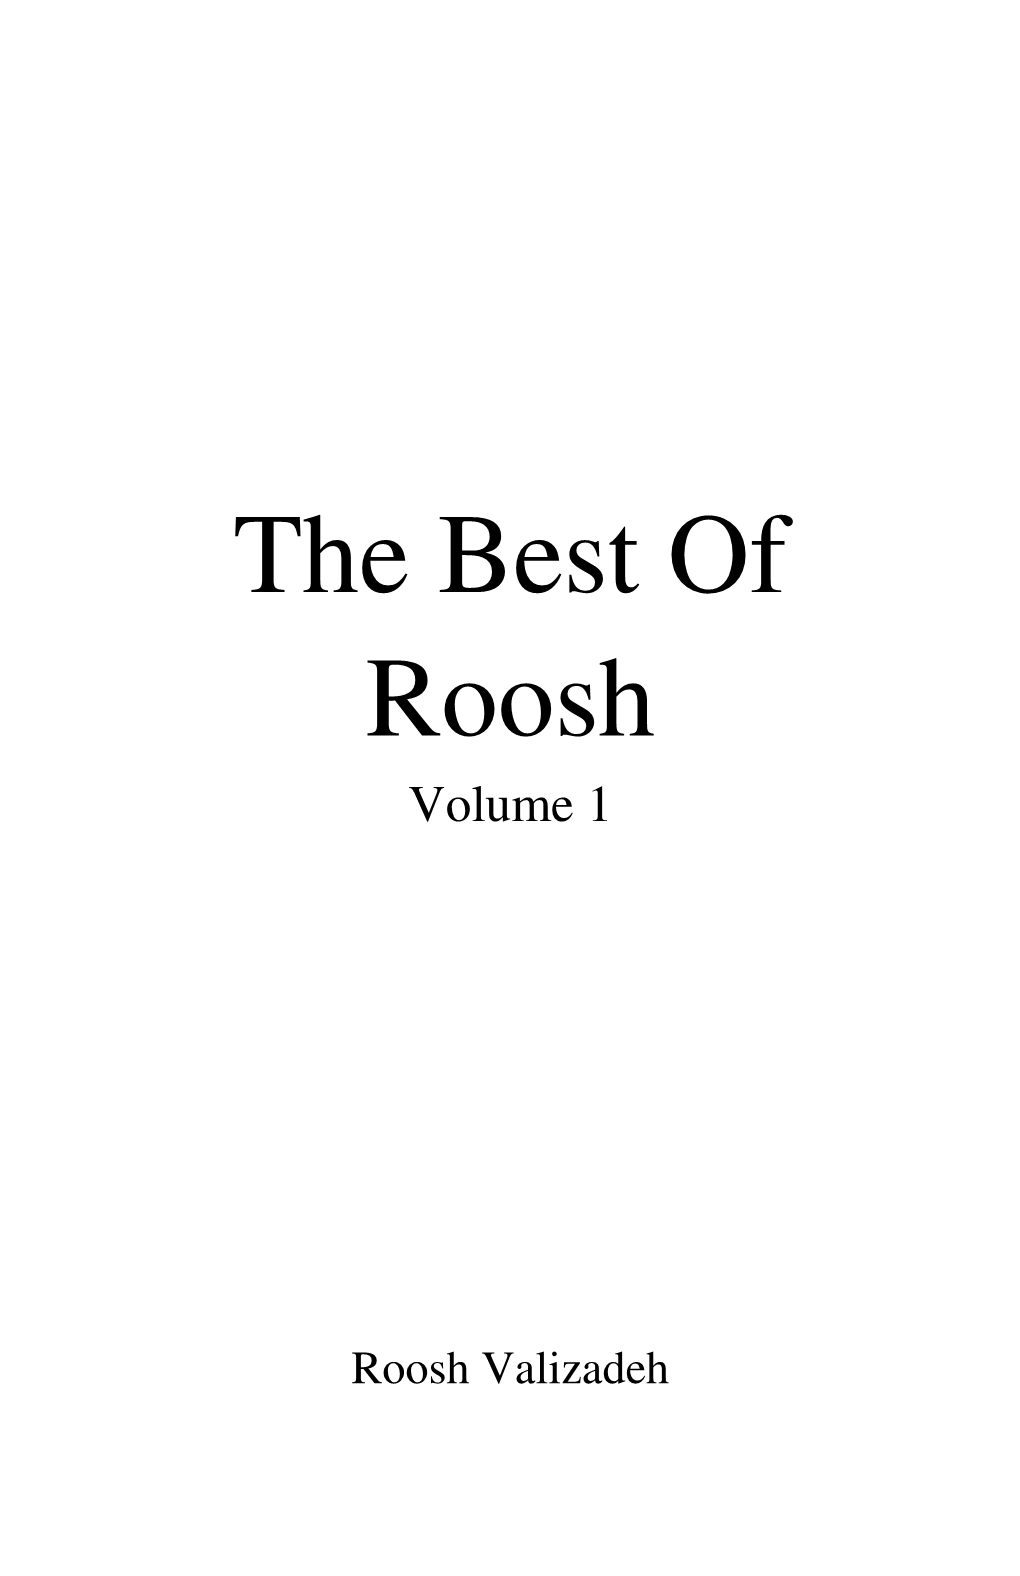 The Best of Roosh Volume 1